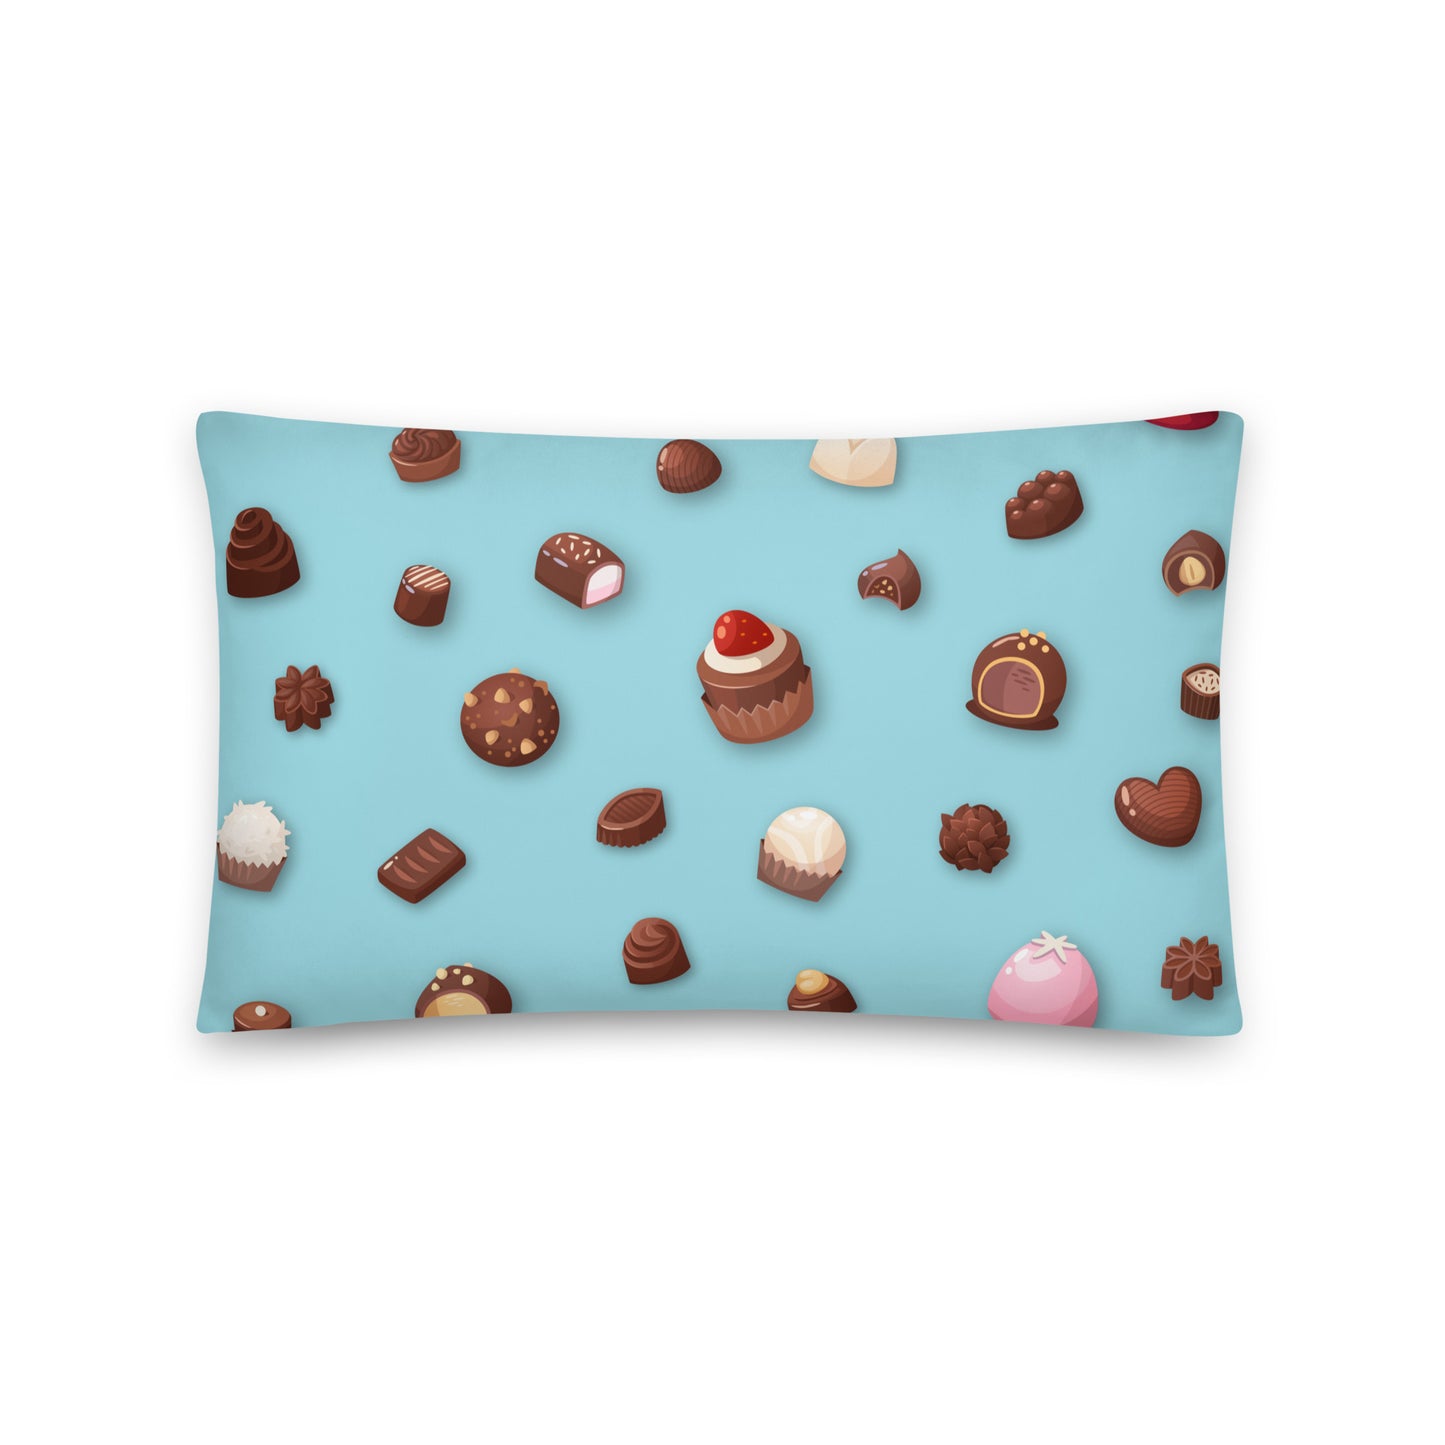 Chocolate Truffle Pillow